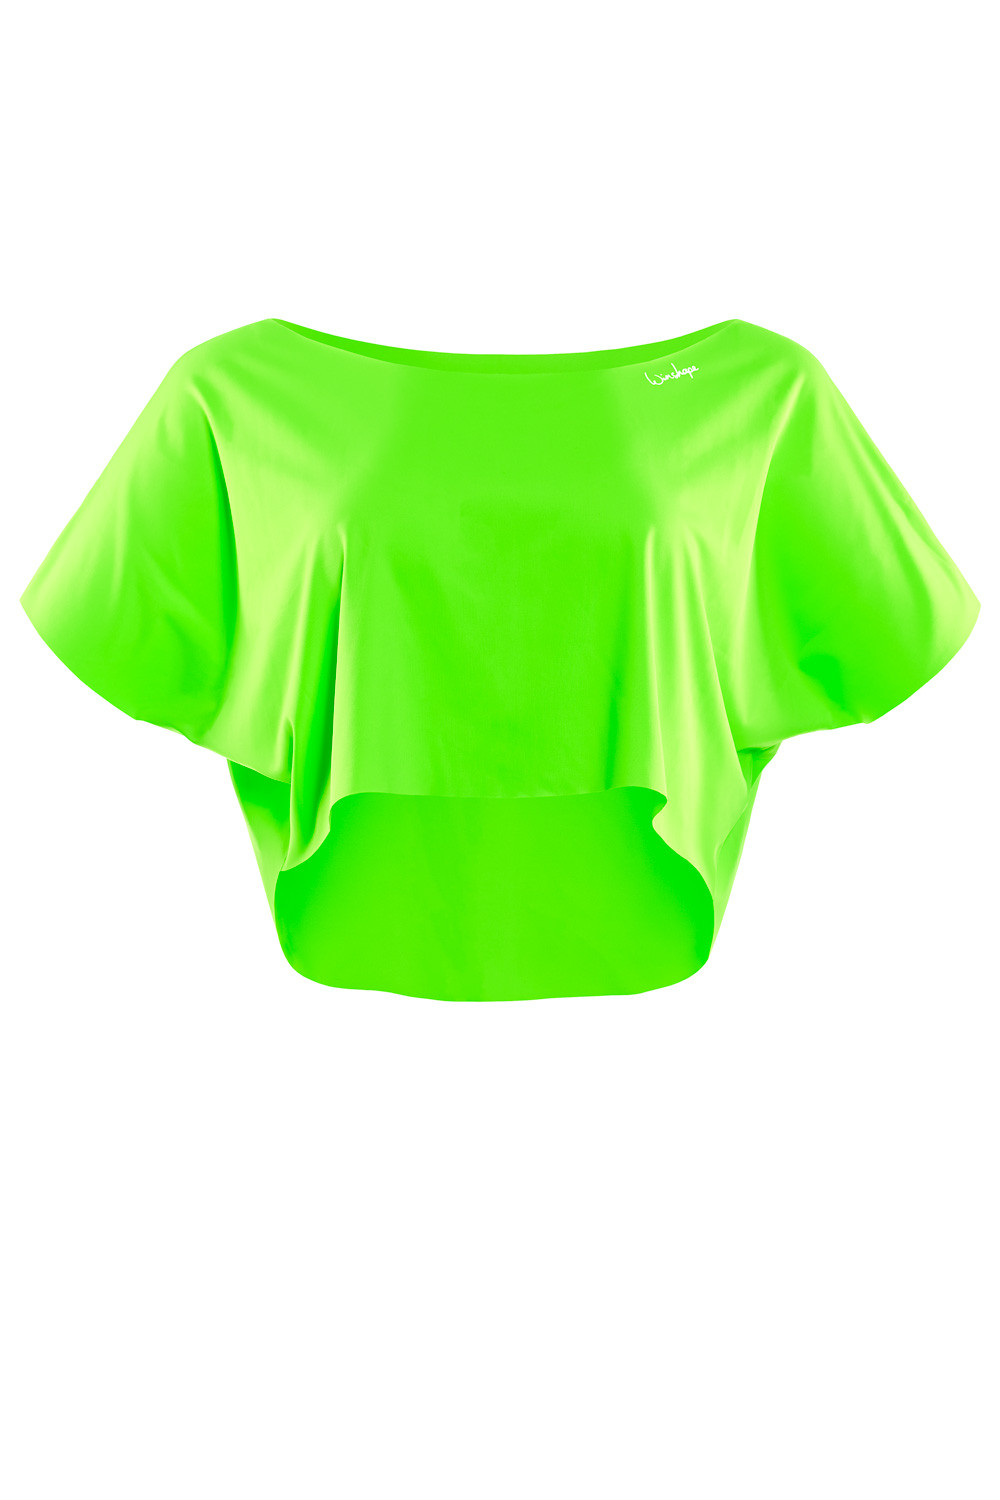 Style Winshape Cropped Dance-Top Dance neon Functional DT104, grün, Light